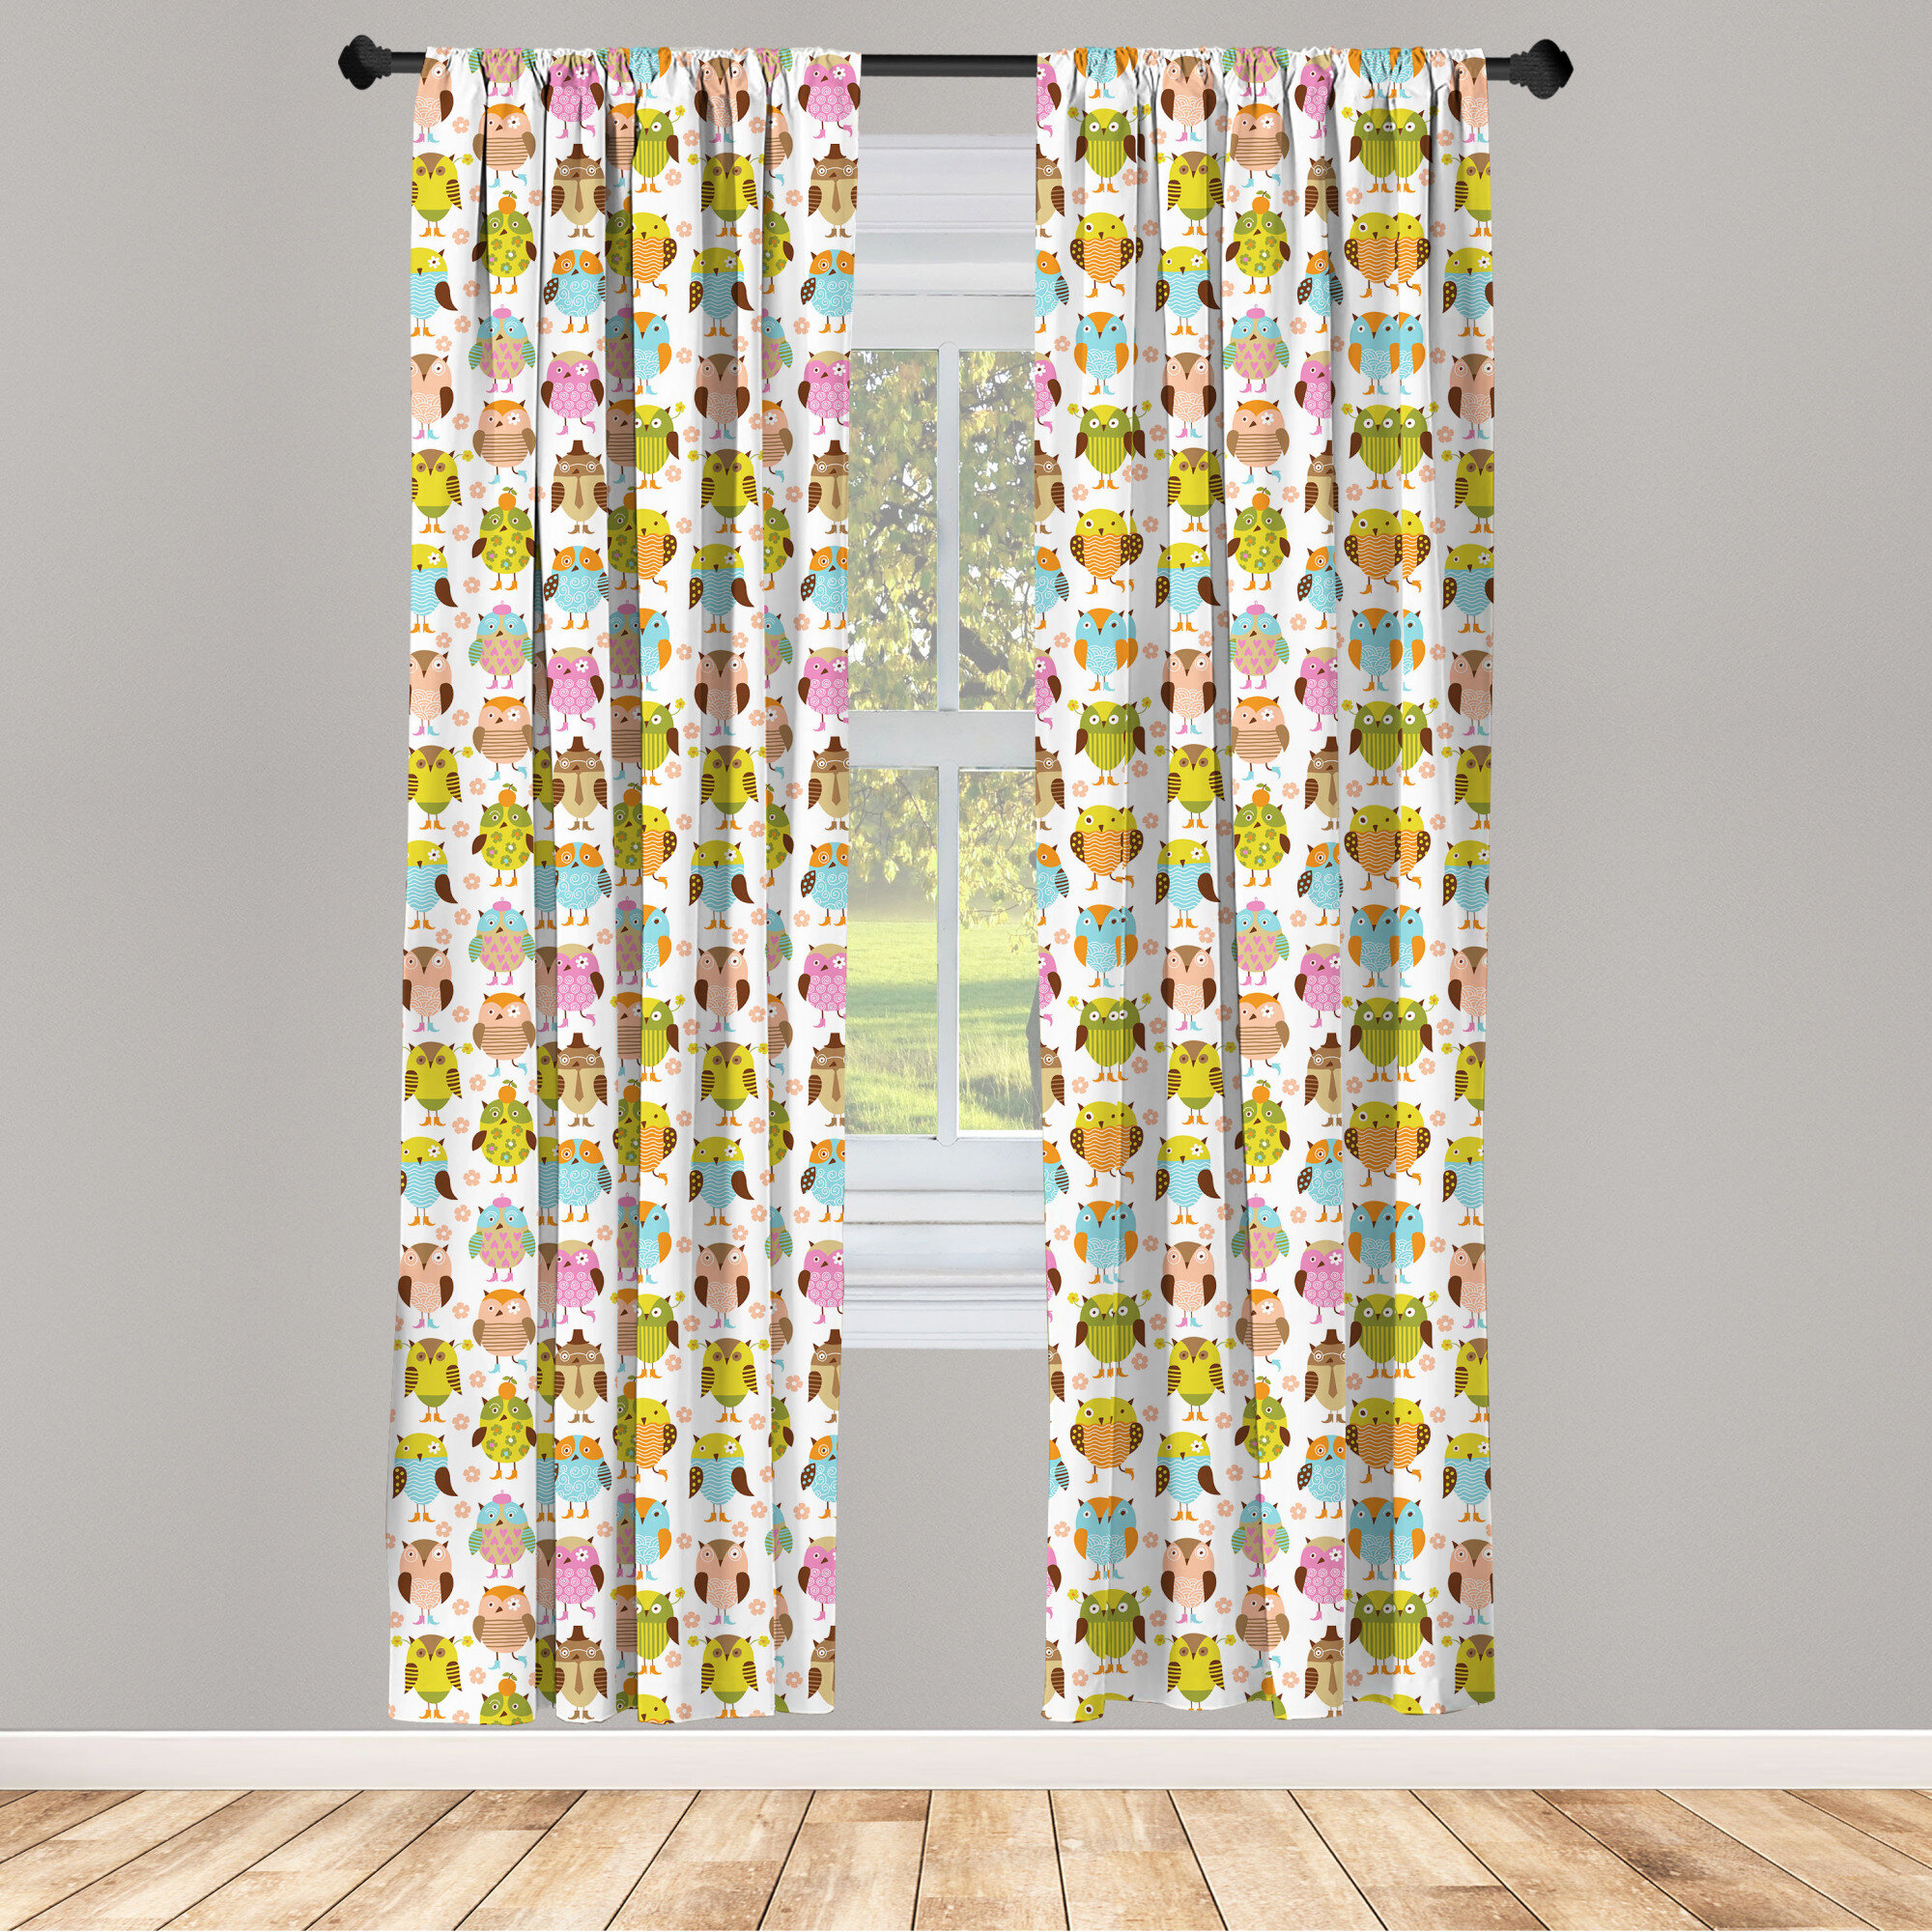 Owl Print Microfiber Curtains 2 Panel Set Living Room Bedroom in 3 Sizes 